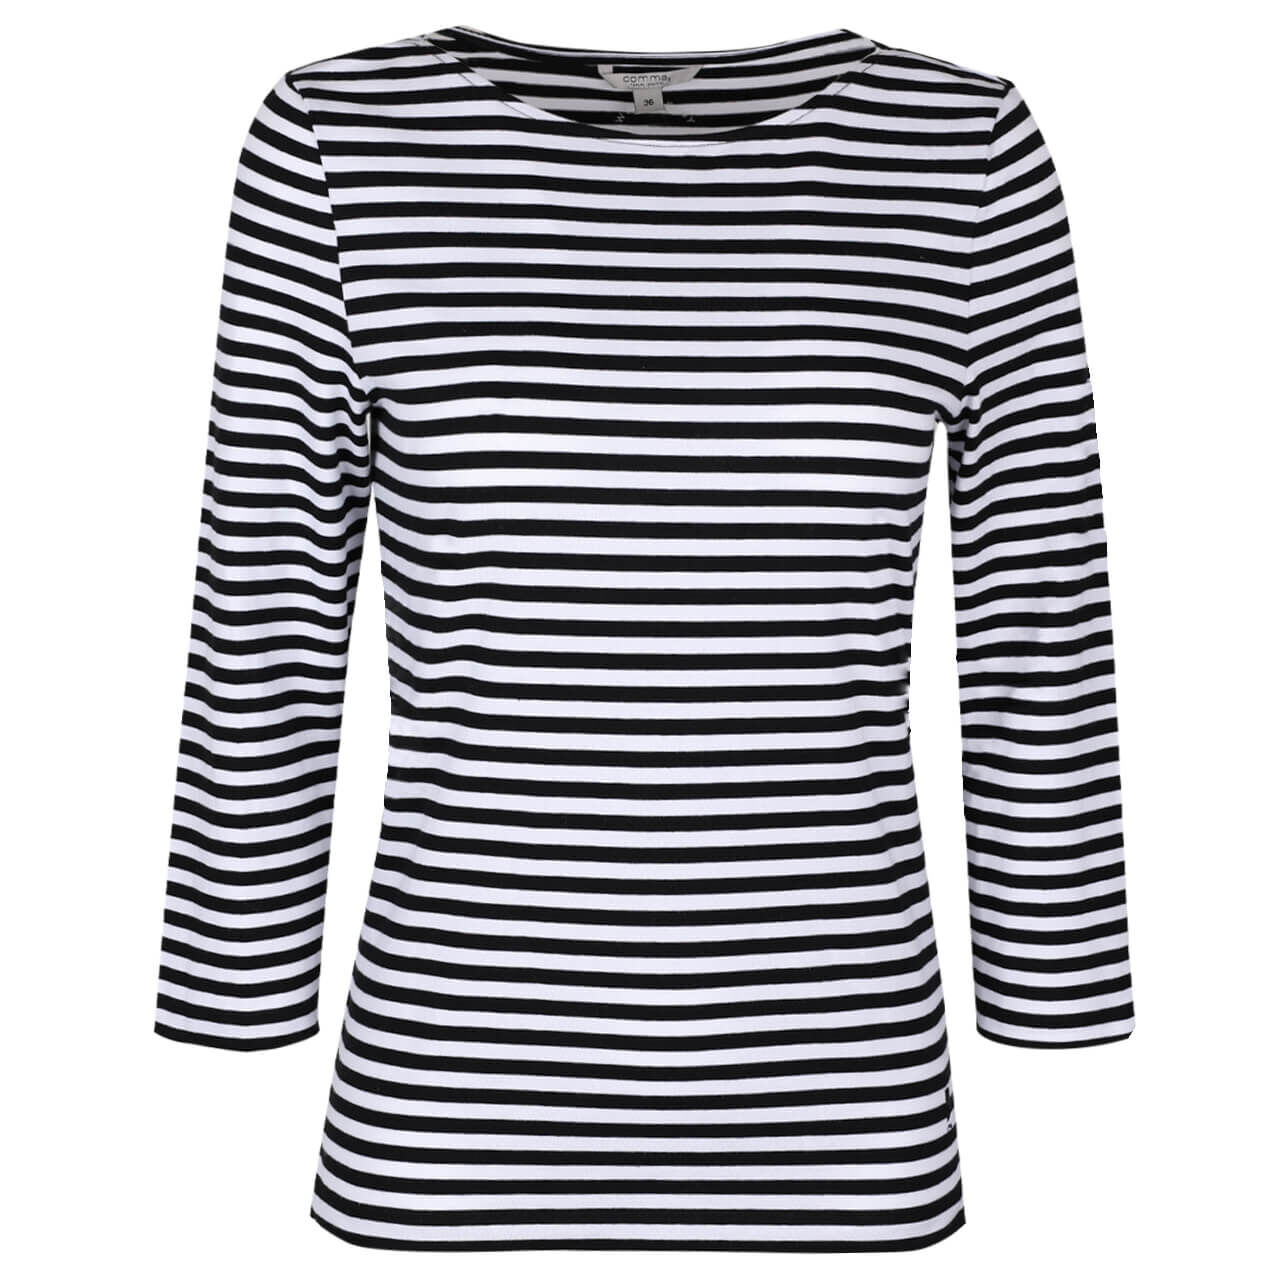 Comma Damen 3/4 Arm Shirt black white stripes